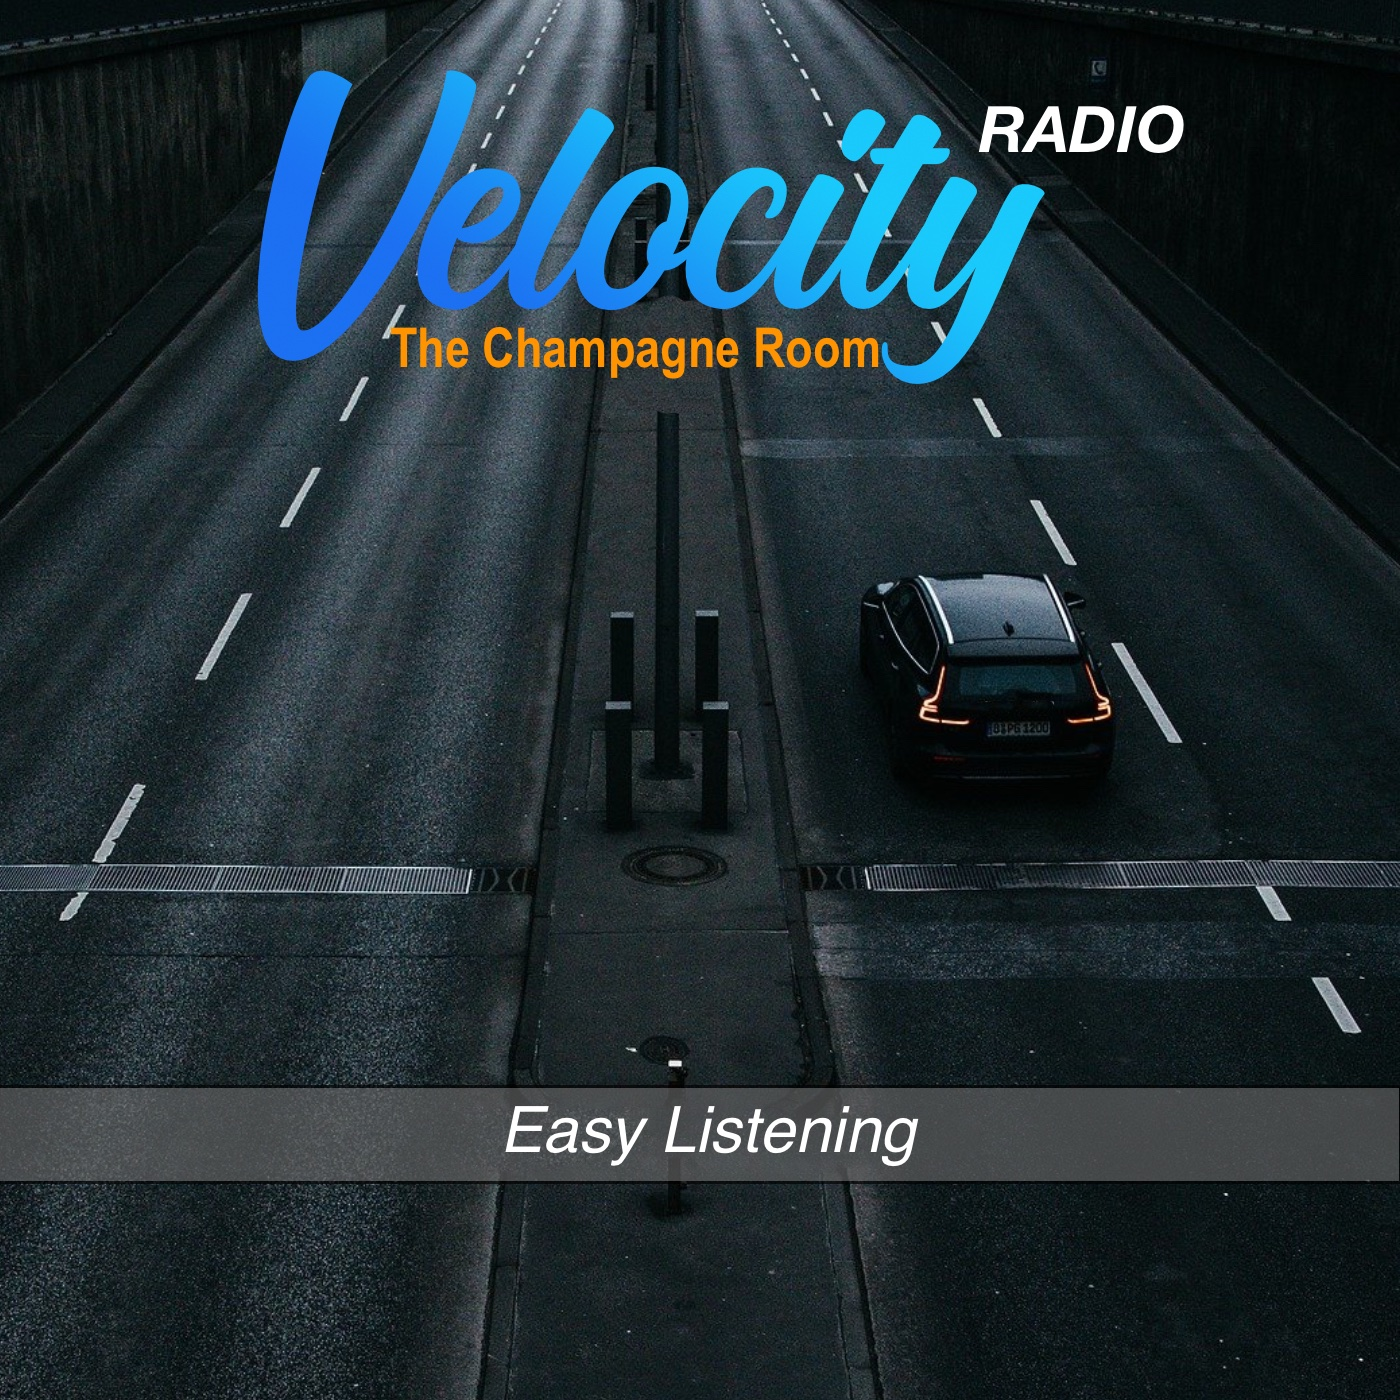 Velocity Radio - The Champagne Room